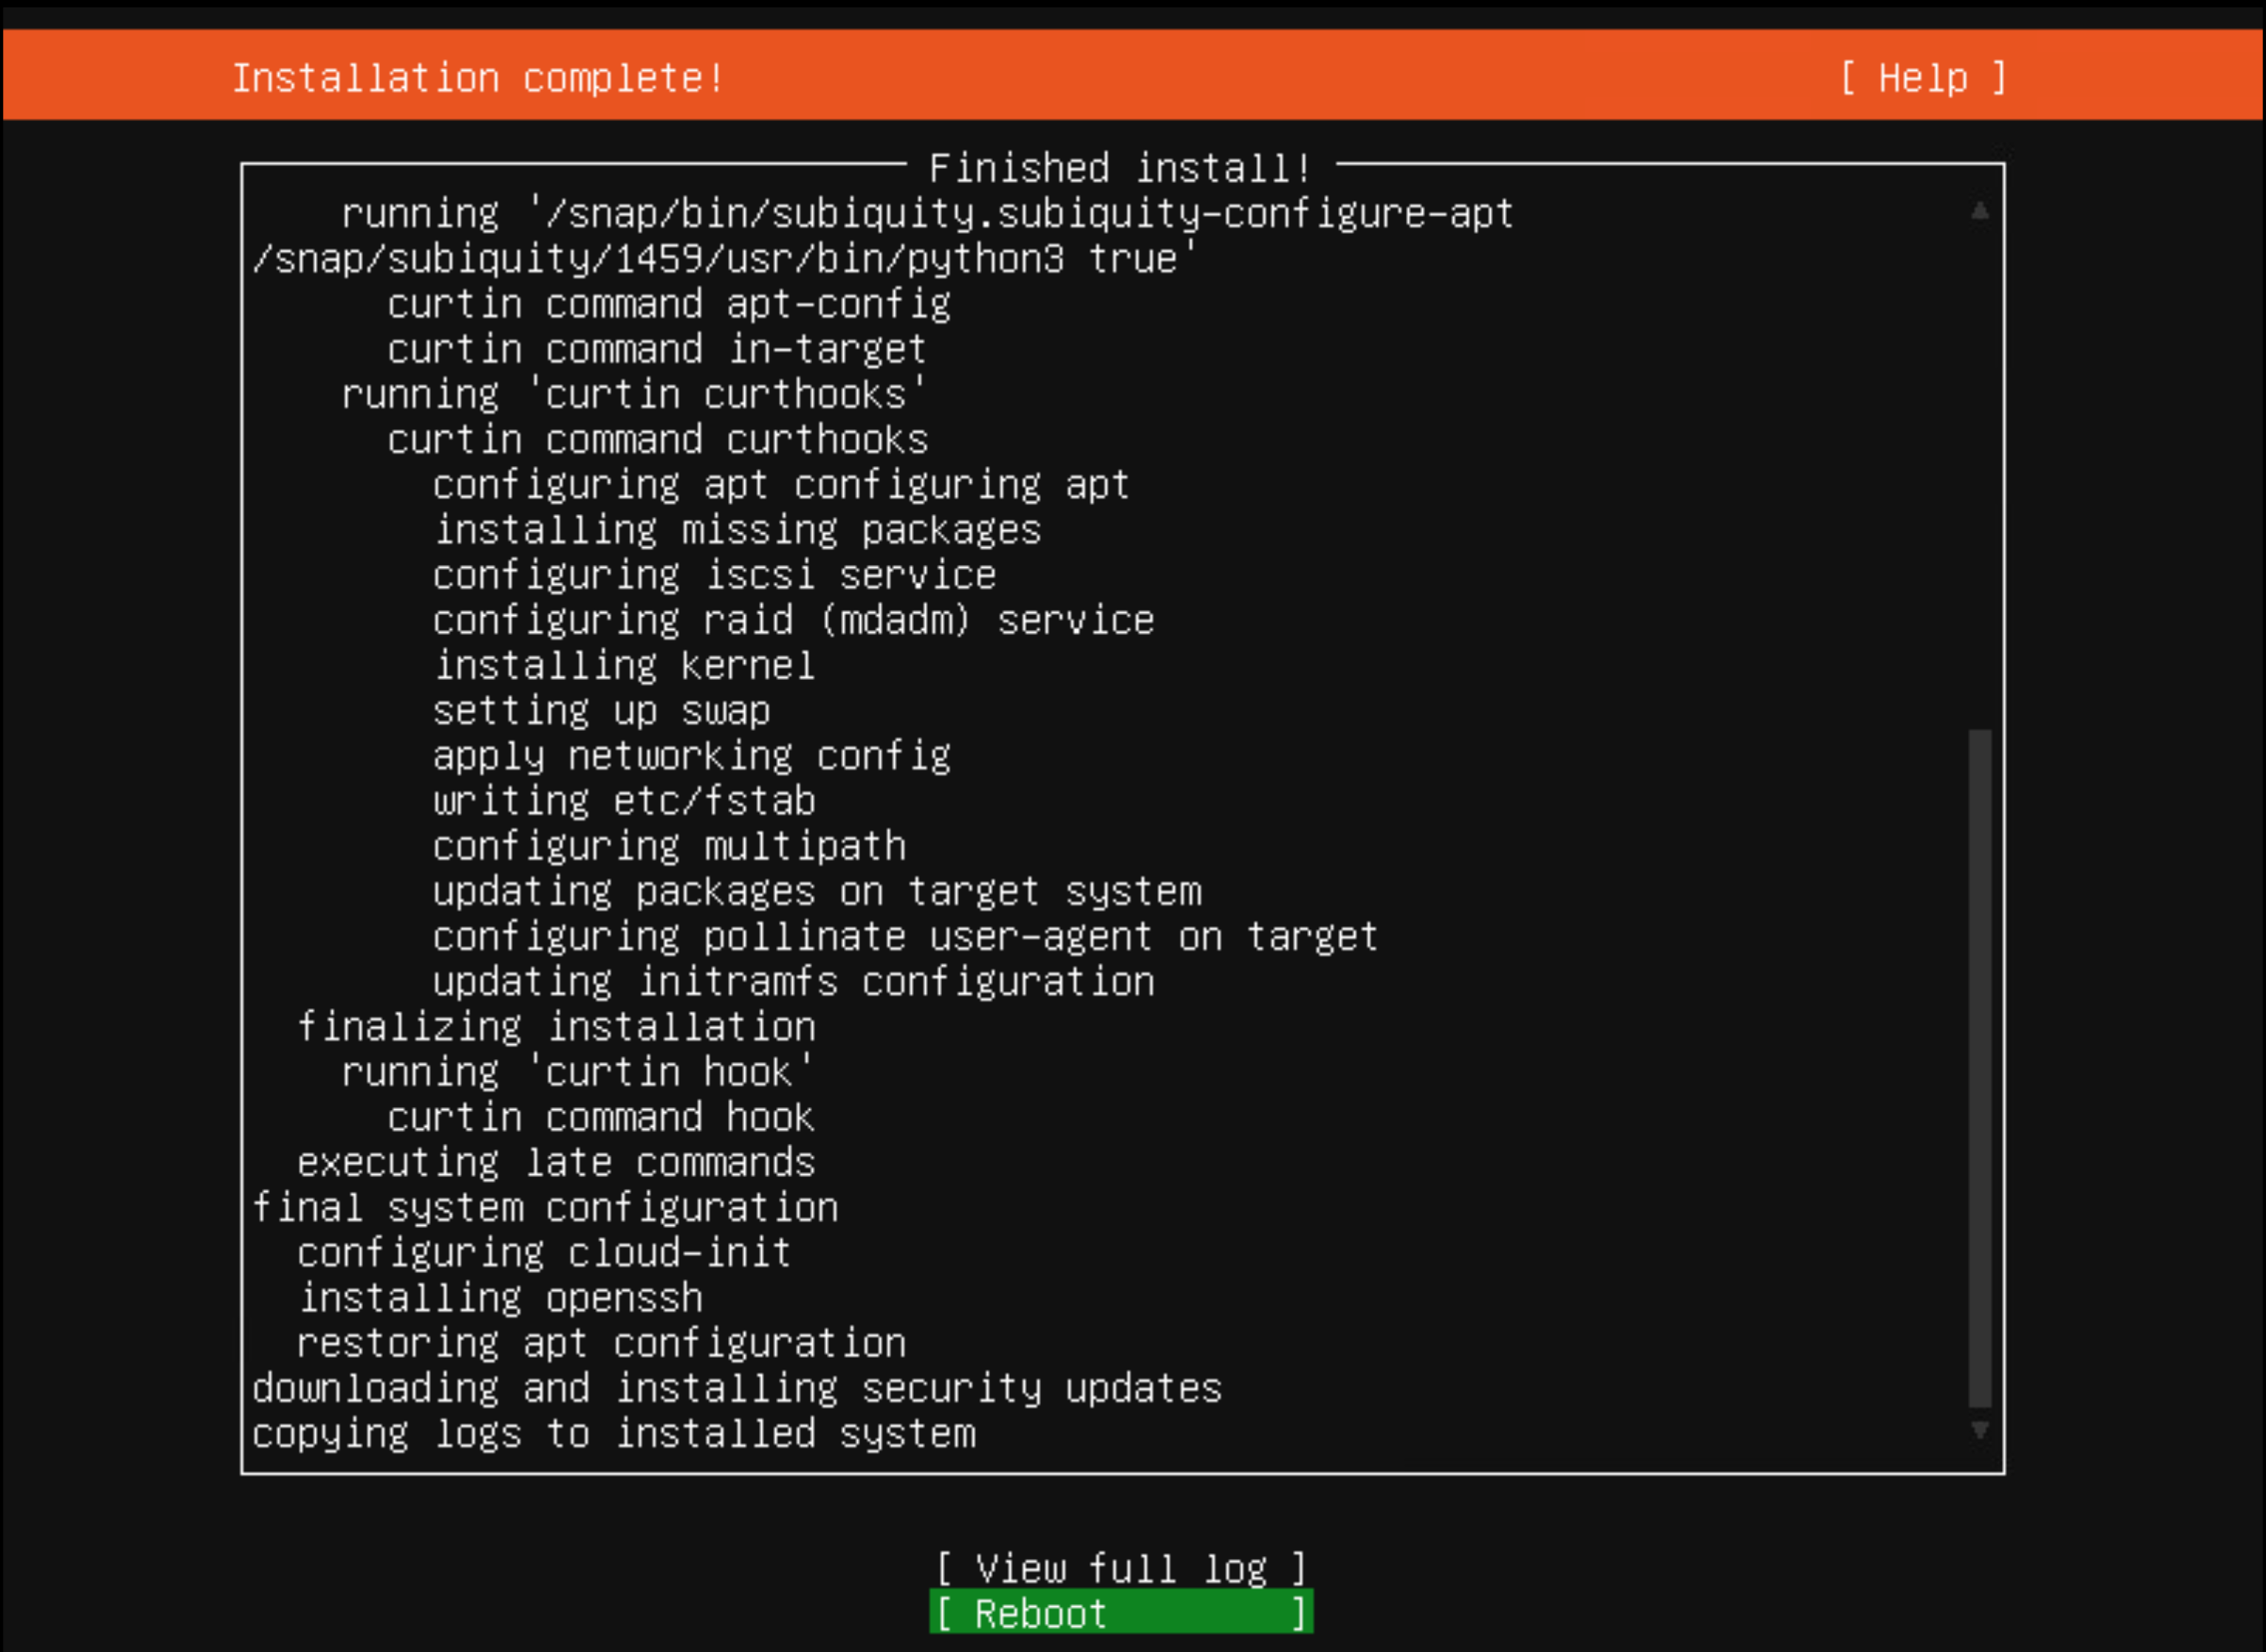 Nineteenth screenshot of an Ubuntu installation.